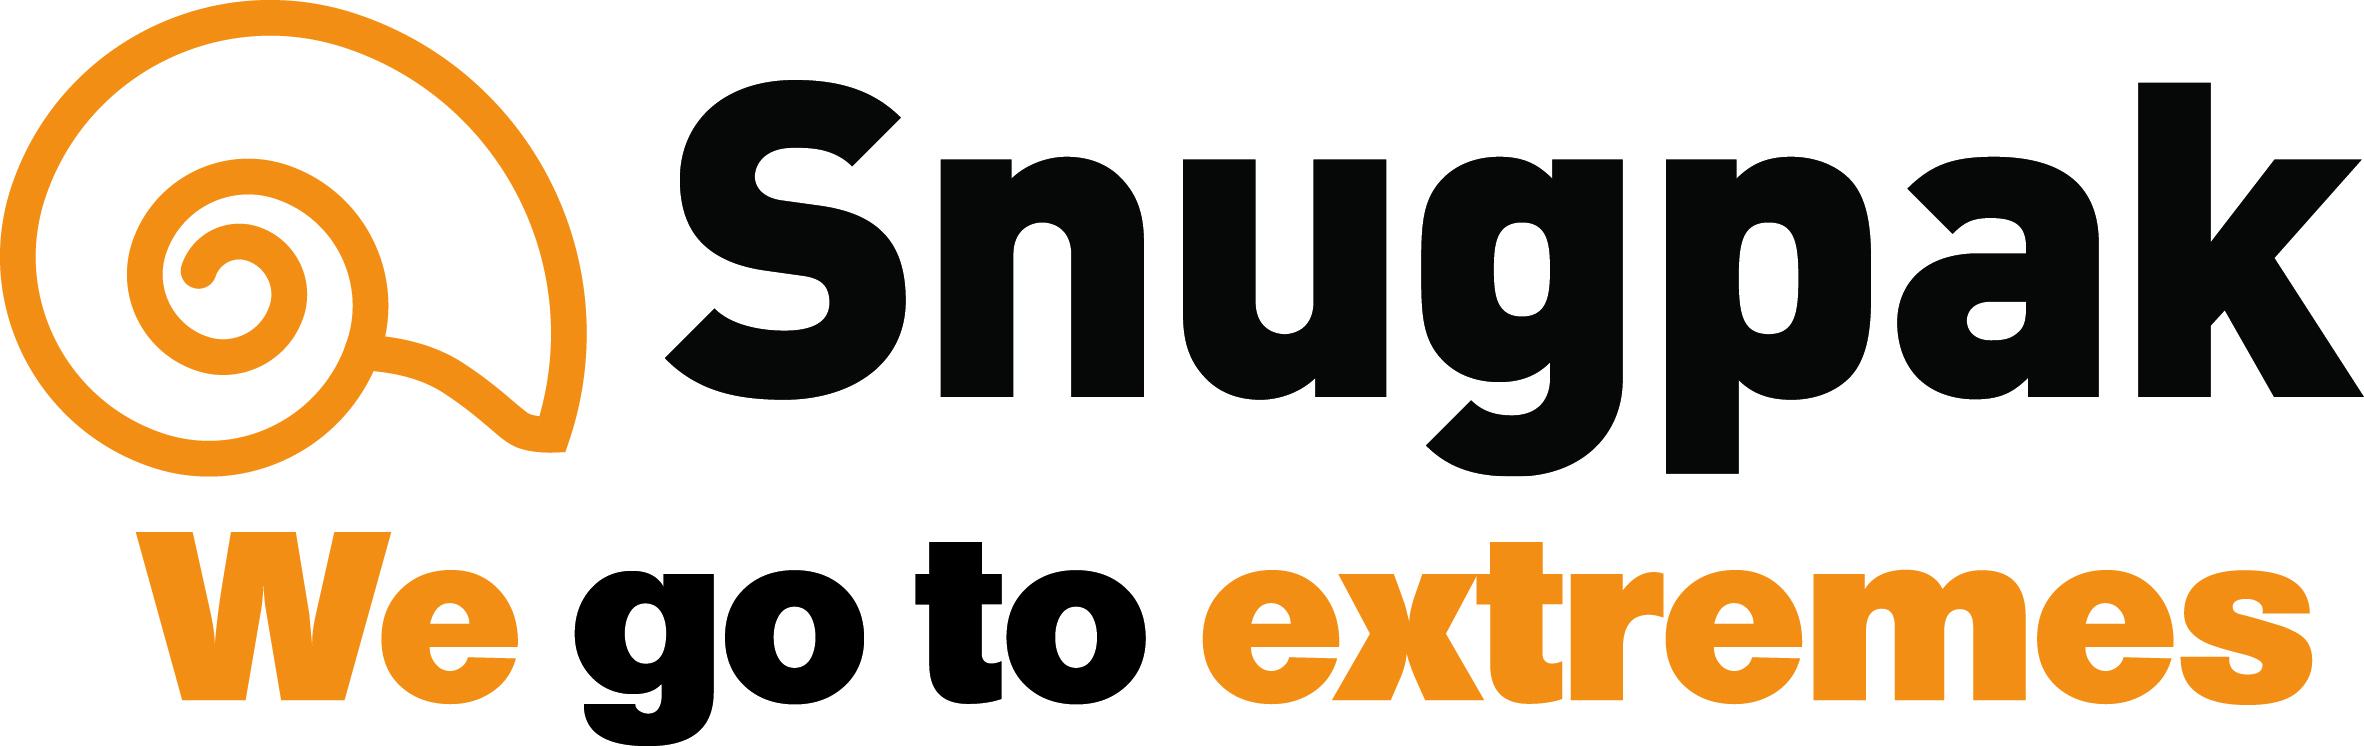 https://www.dtacticalsupply.com/wp-content/uploads/2020/04/Snugpak_Logo-with-tag.jpg